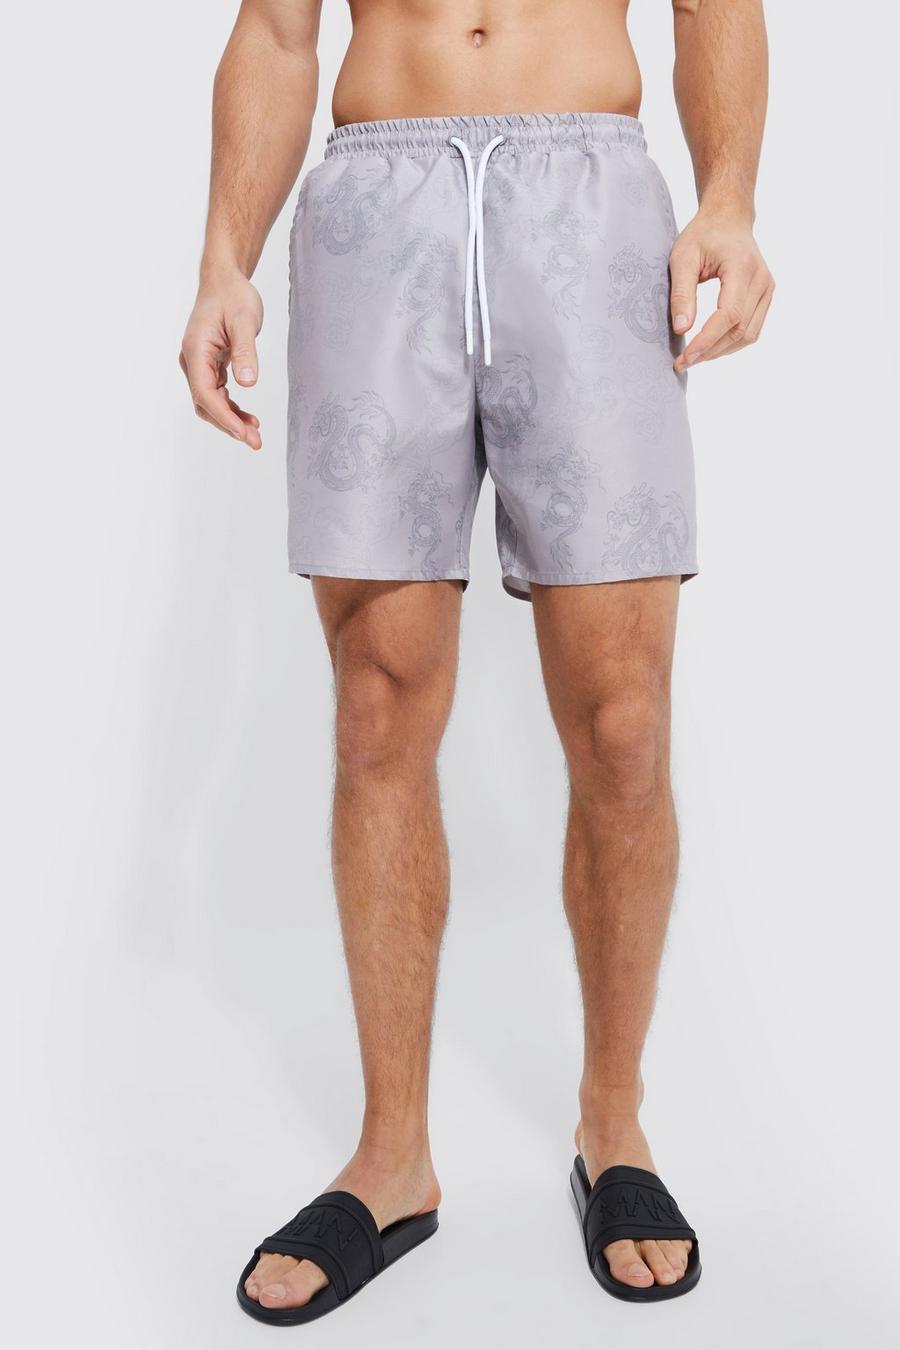 Grey Tall Dragon Print Swim Shorts